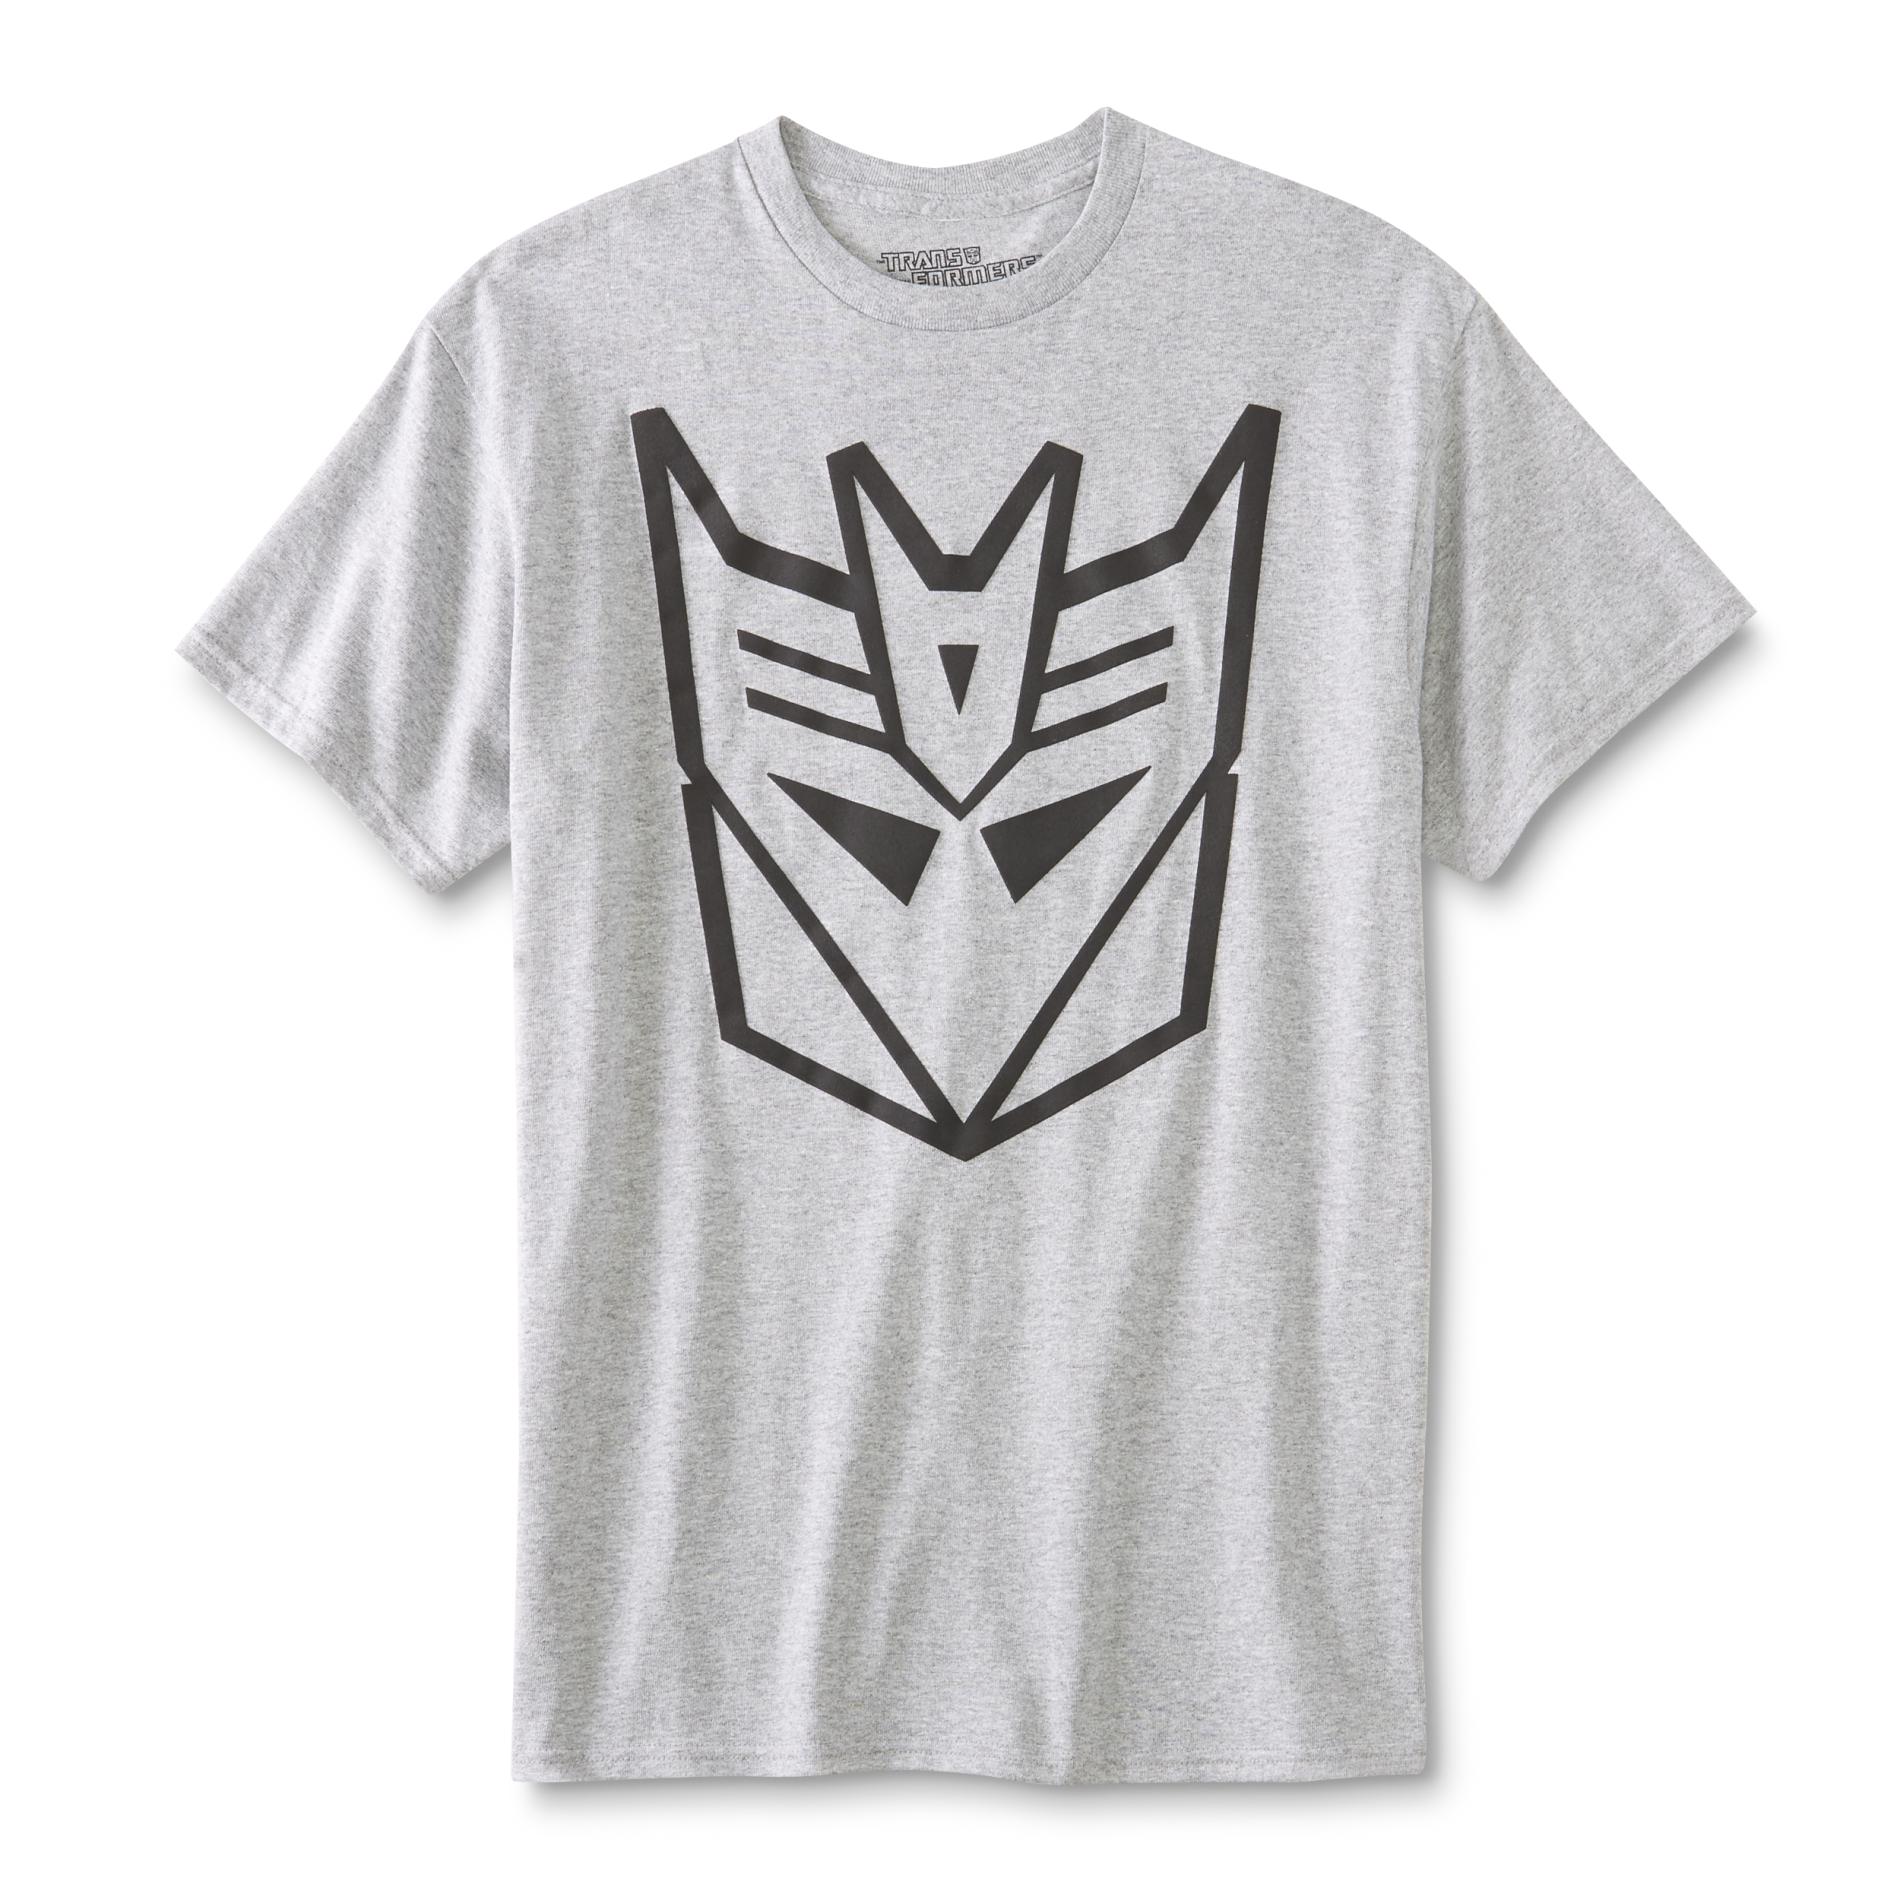 Transformers Men's Graphic T-Shirt - Decepticon